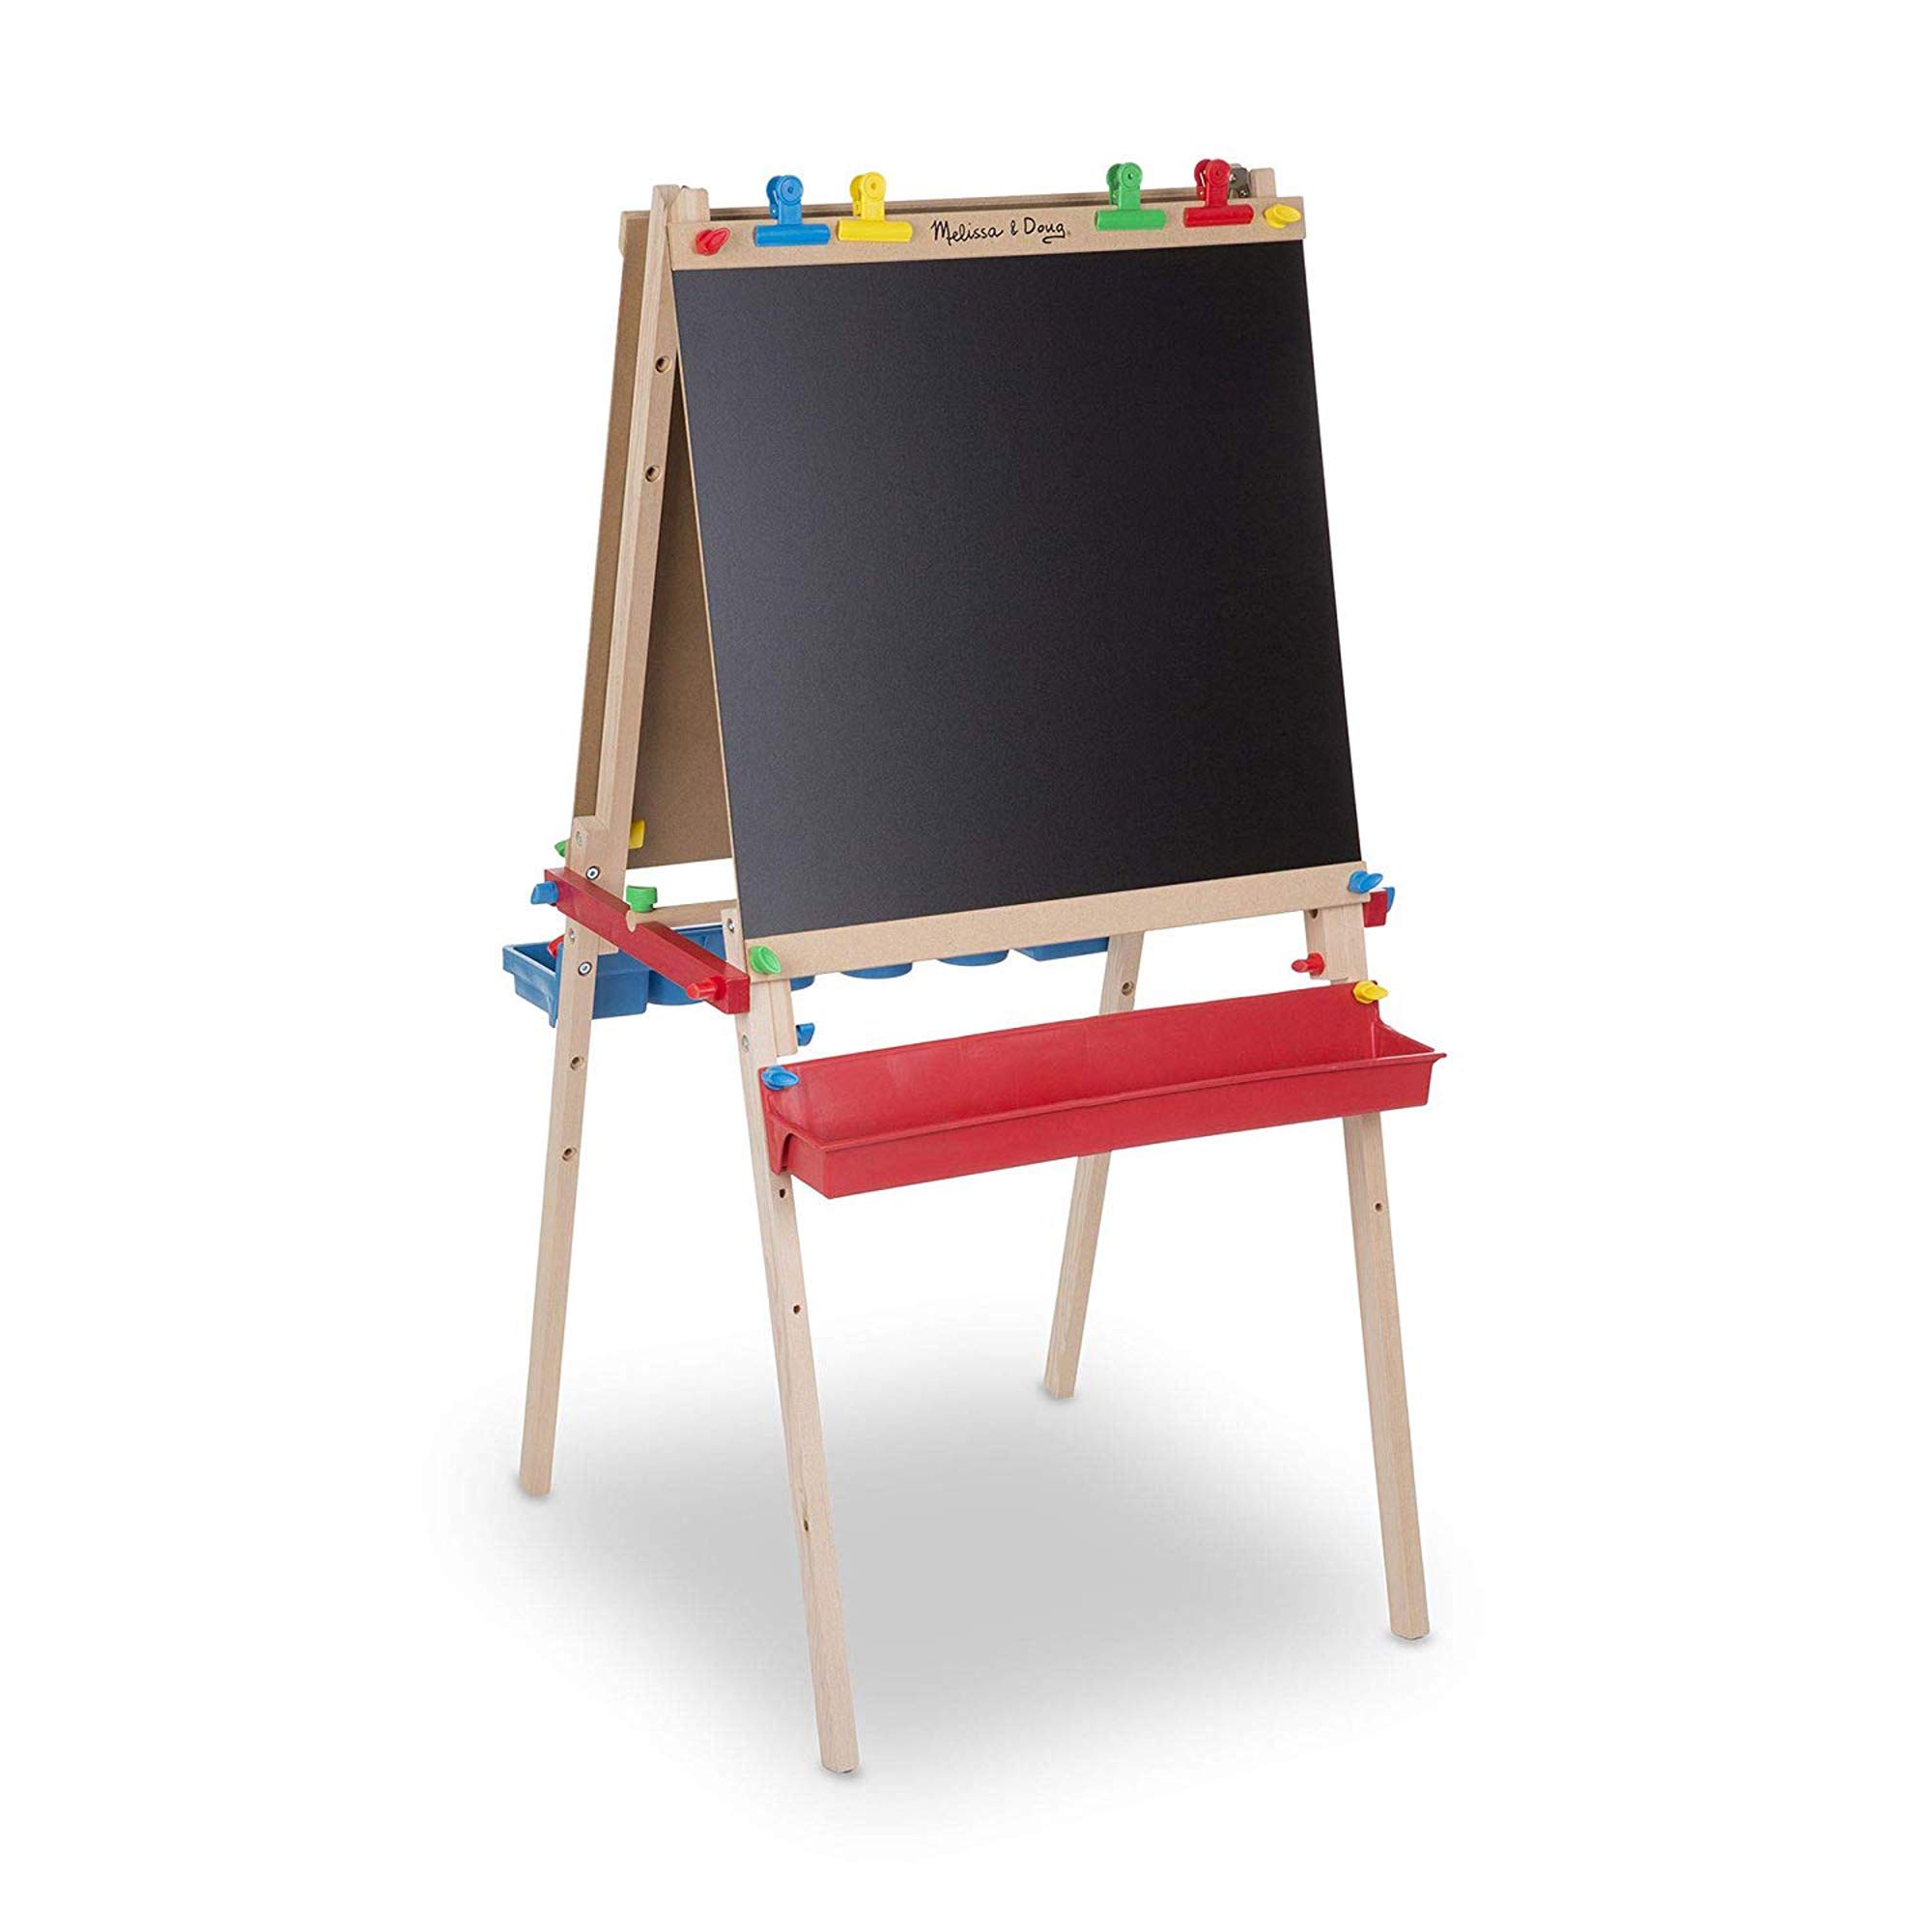 Melissa & Doug Deluxe Standing Art Easel w/ Dry-Erase Board, Chalkboard & Paper Roller $53.15 + Free Shipping